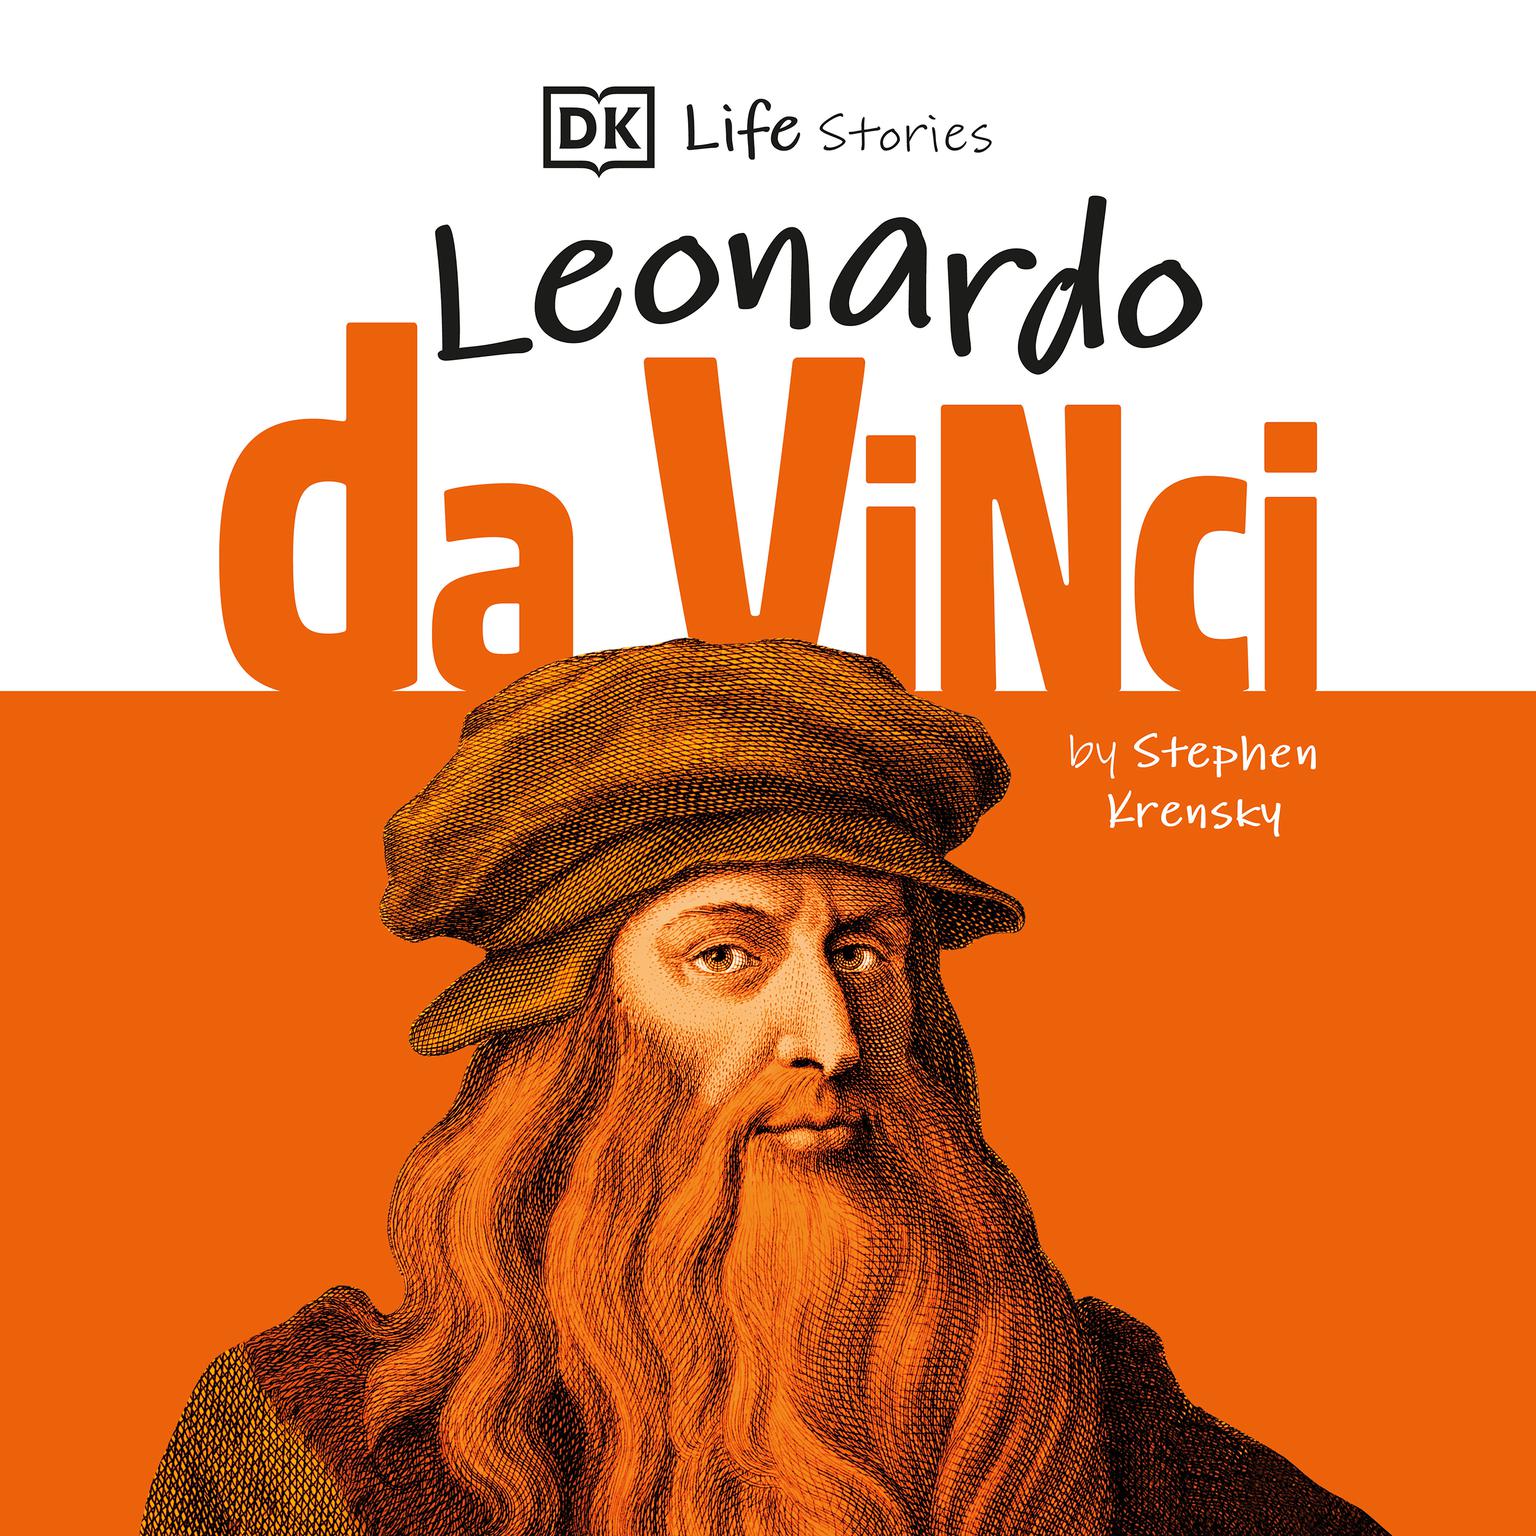 DK Life Stories: Leonardo da Vinci Audiobook, by Stephen Krensky